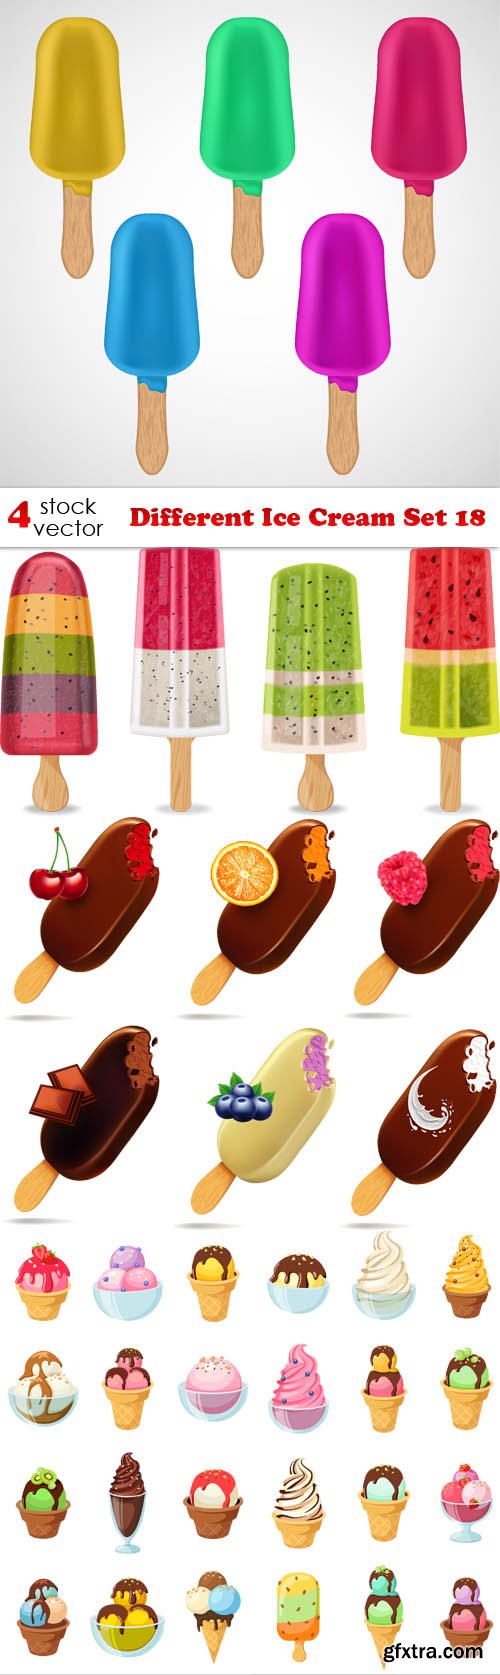 Vectors - Different Ice Cream Set 18